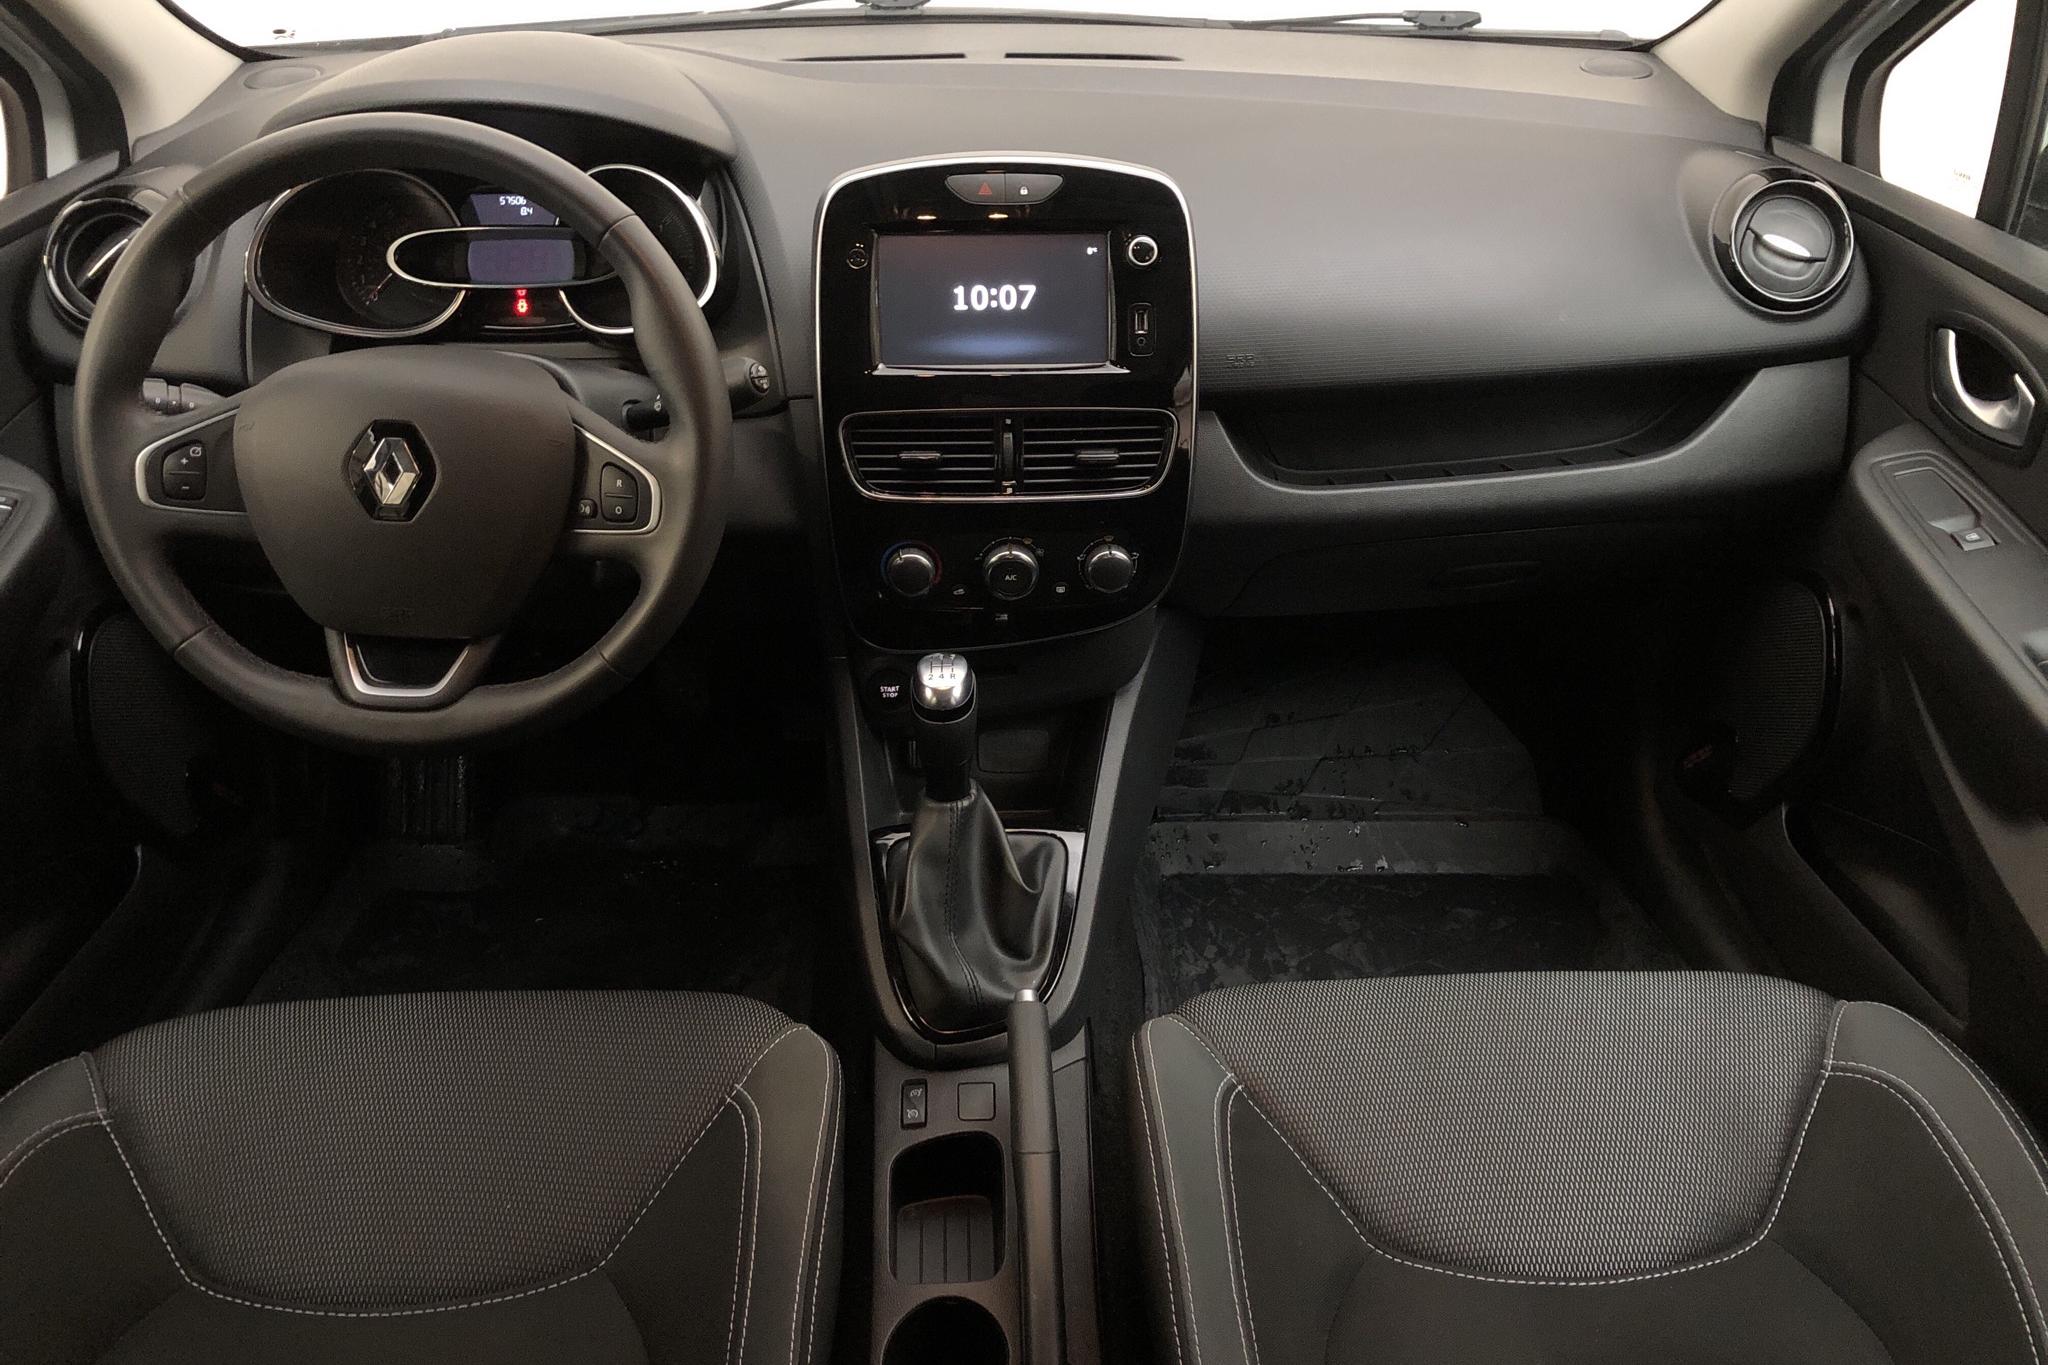 Renault Clio IV 1.2 16V 5dr (75hk) - 57 490 km - Manual - white - 2018